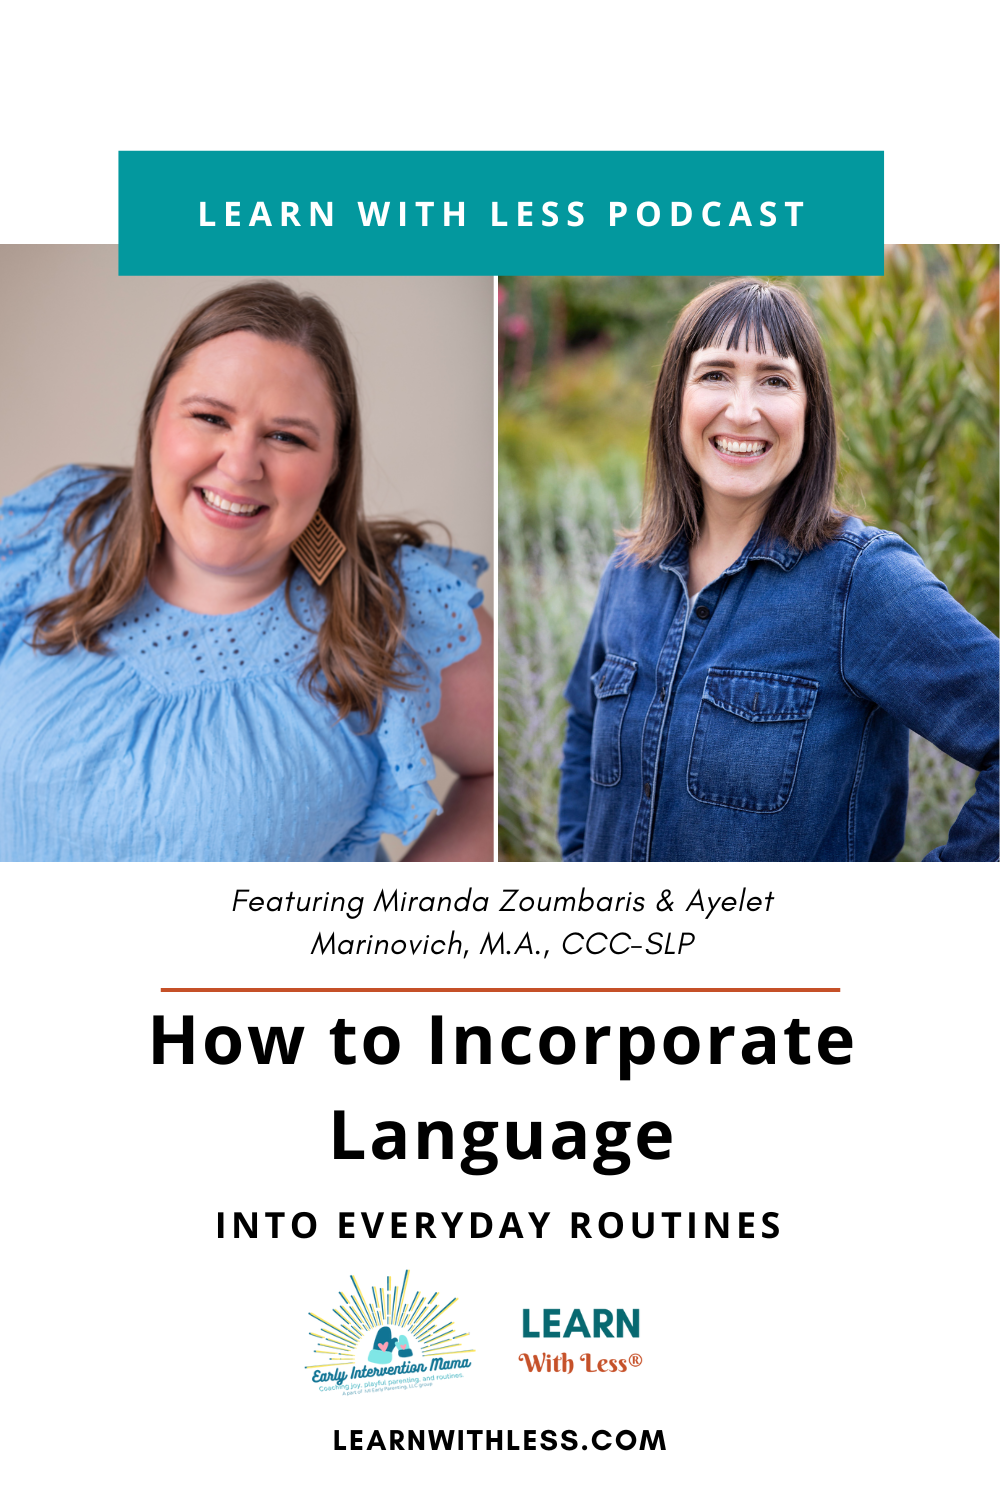 How to Incorporate Language into Everyday Routines, with Miranda Zoumbaris and Ayelet Marinovich